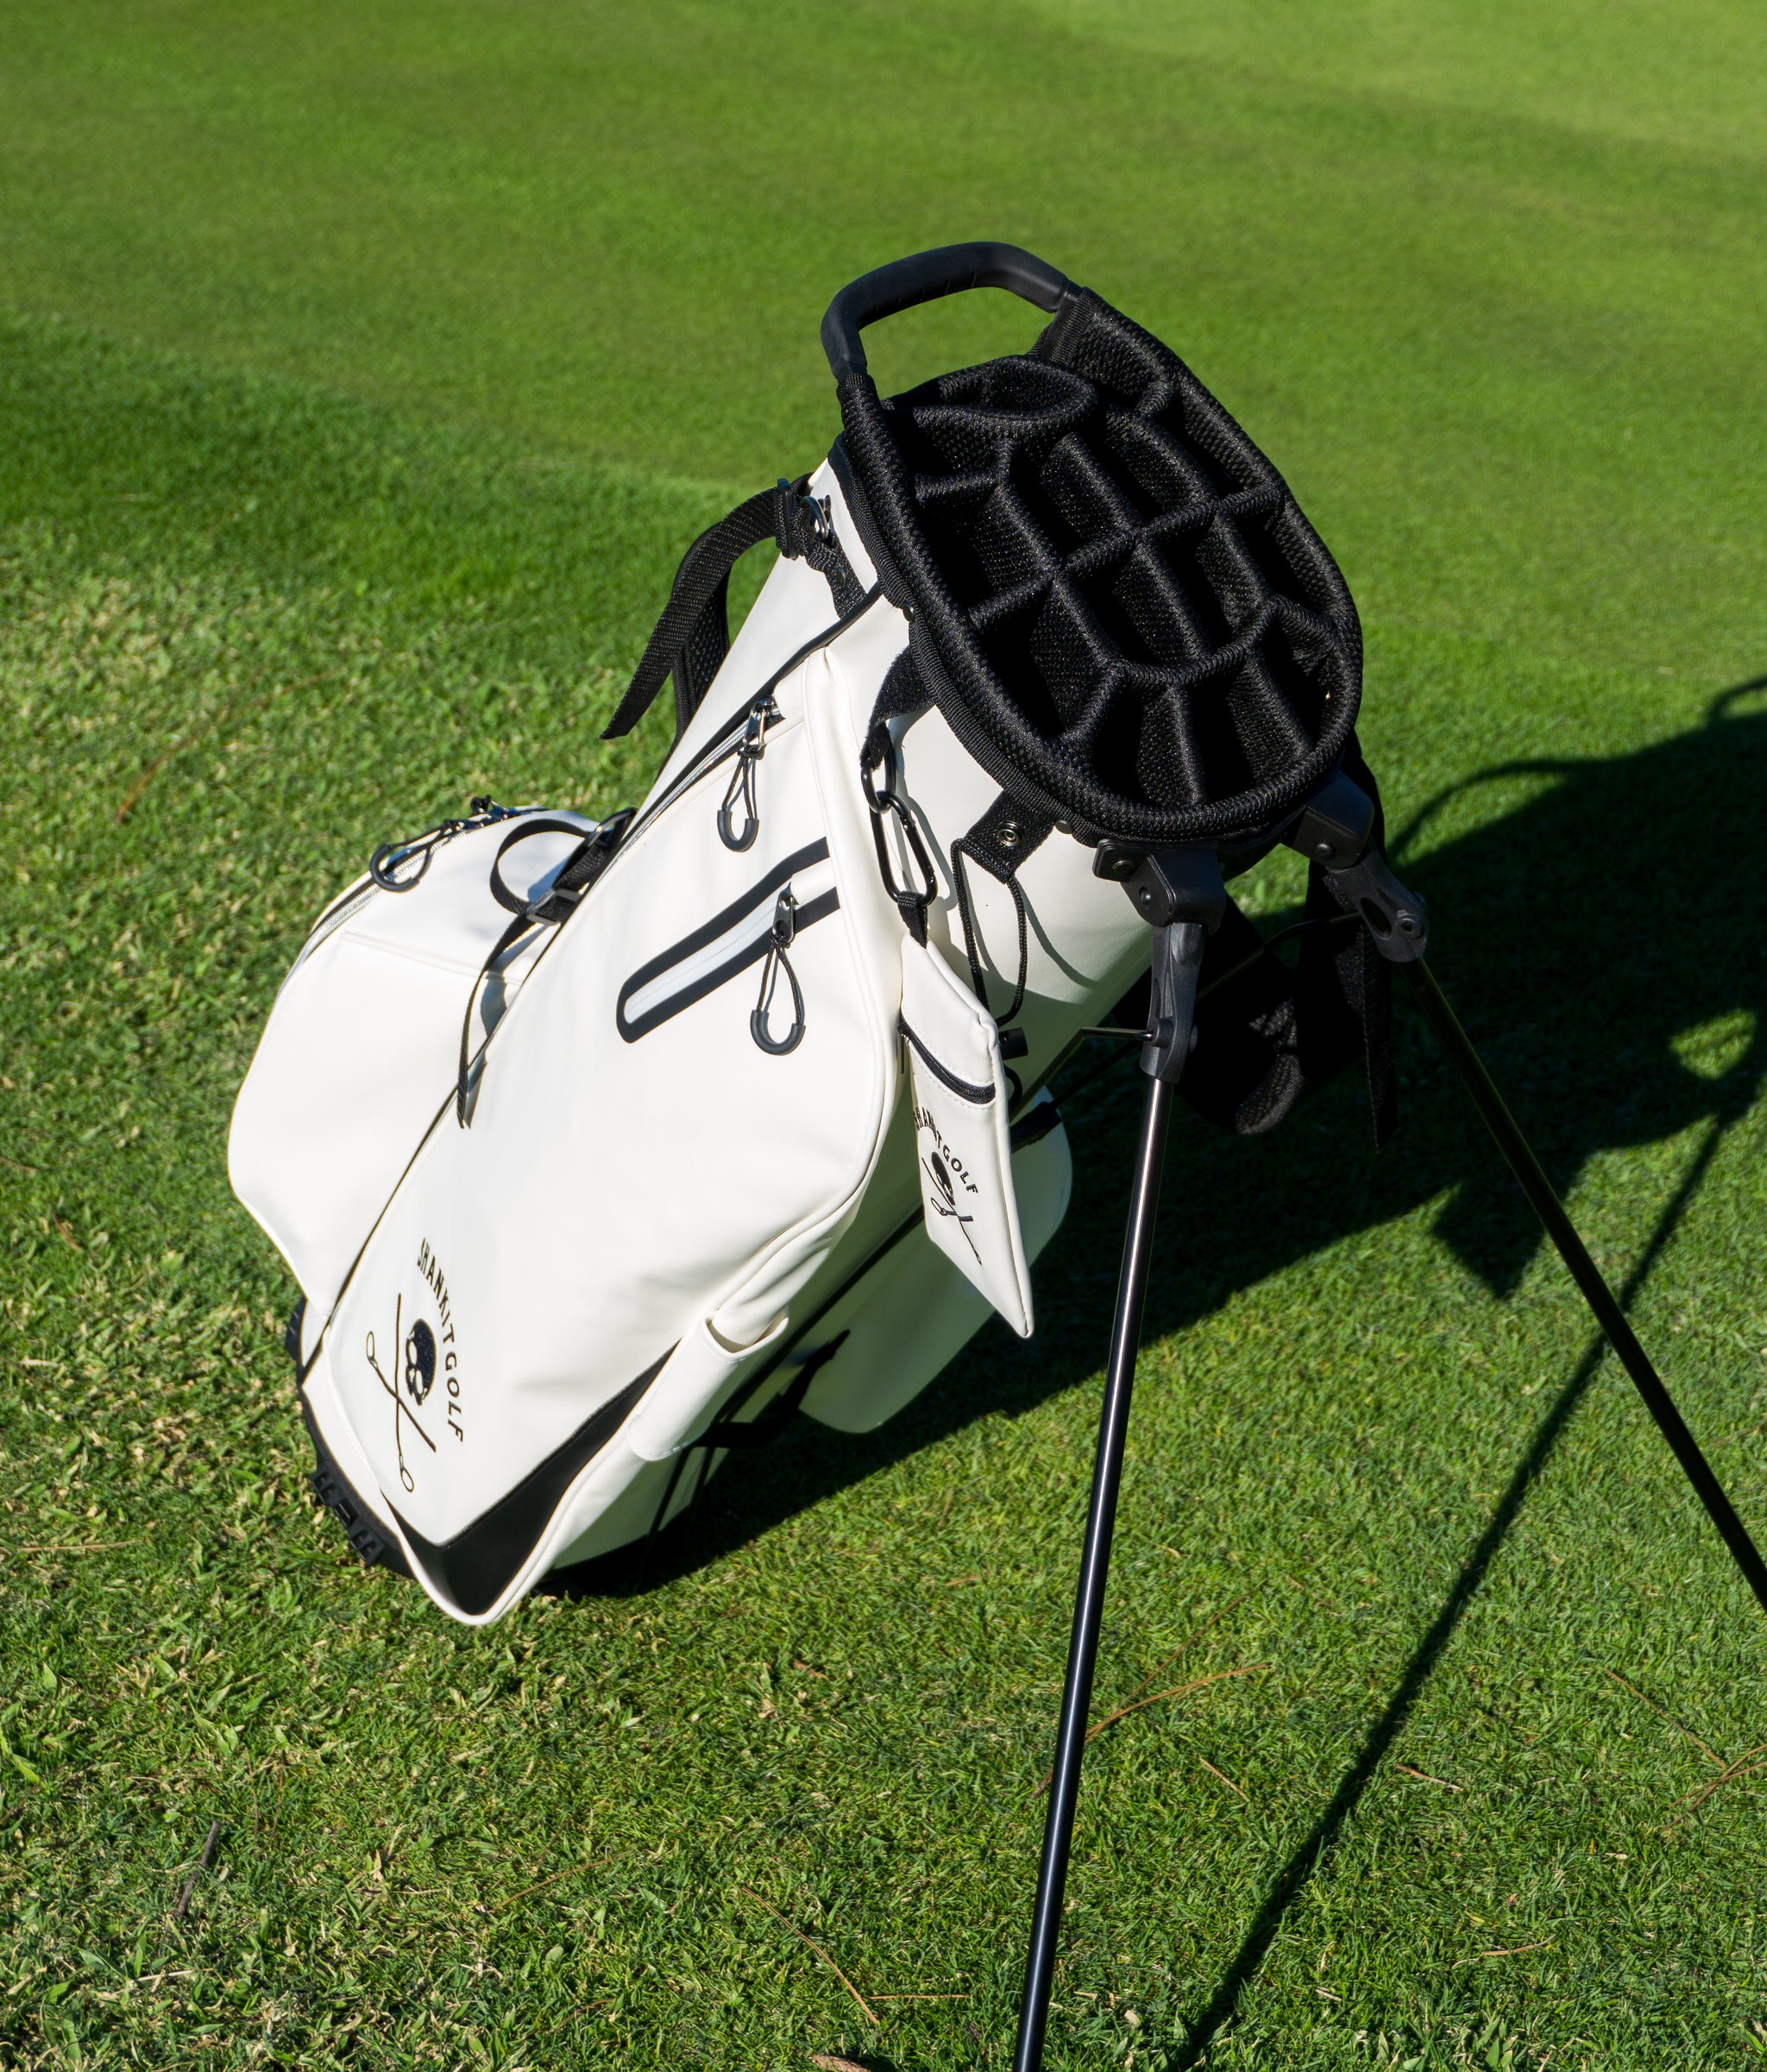 Shankitgolf White Golf Bag – Shank it Golf